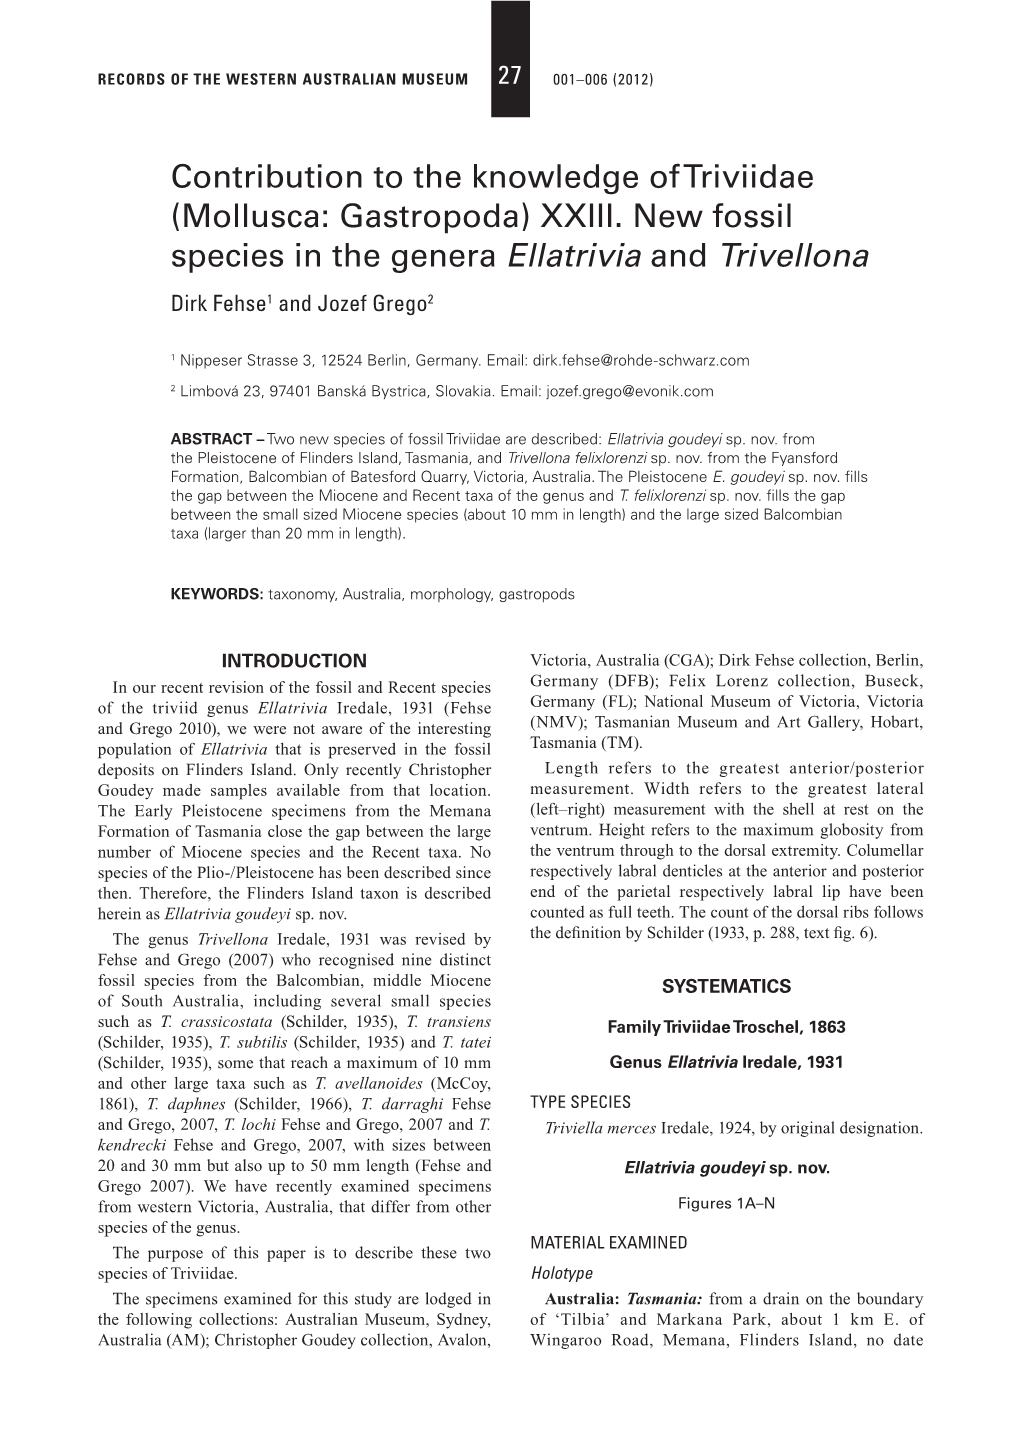 Contribution to the Knowledge of Triviidae (Mollusca: Gastropoda) XXIII